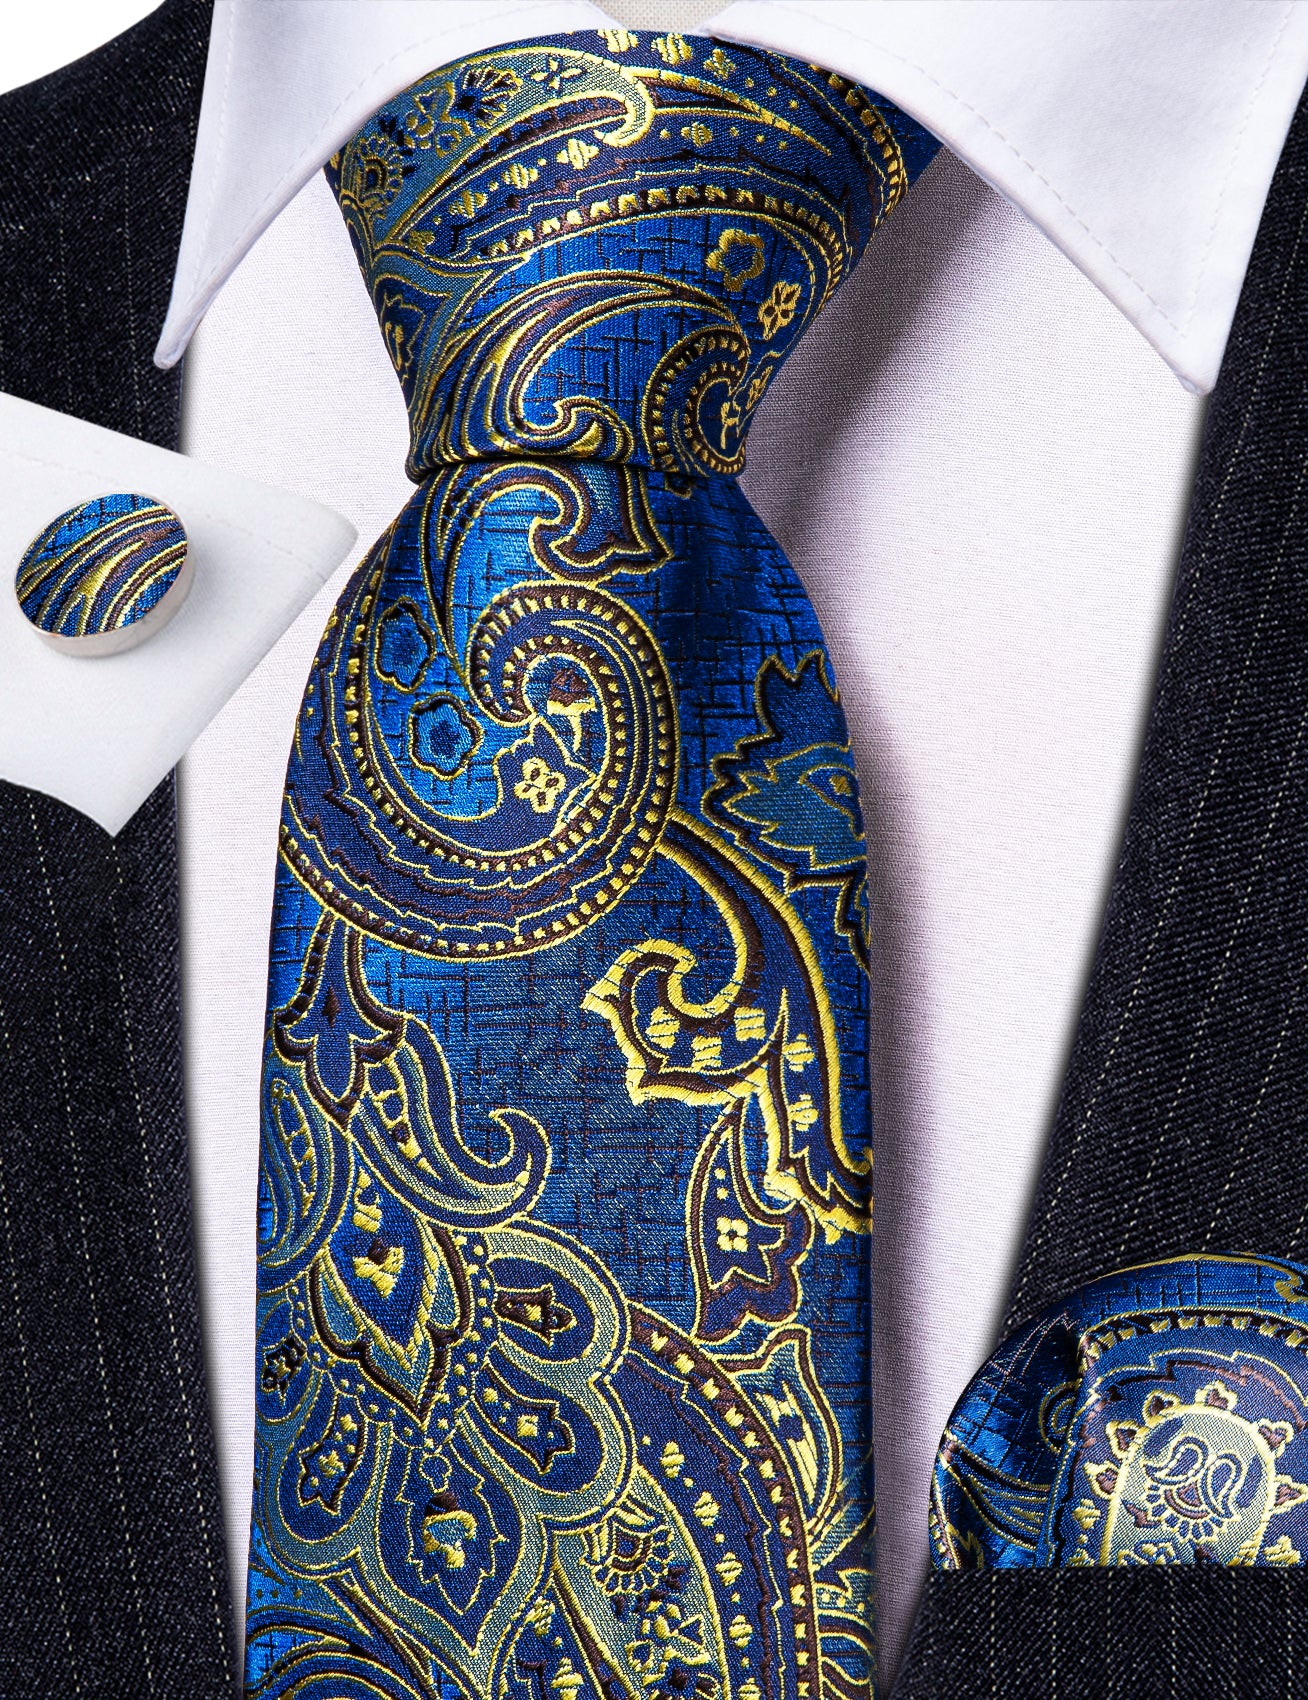 Barry.wang Floral Tie Yellow Blue Paisley Silk Tie Men's Cufflinks Set